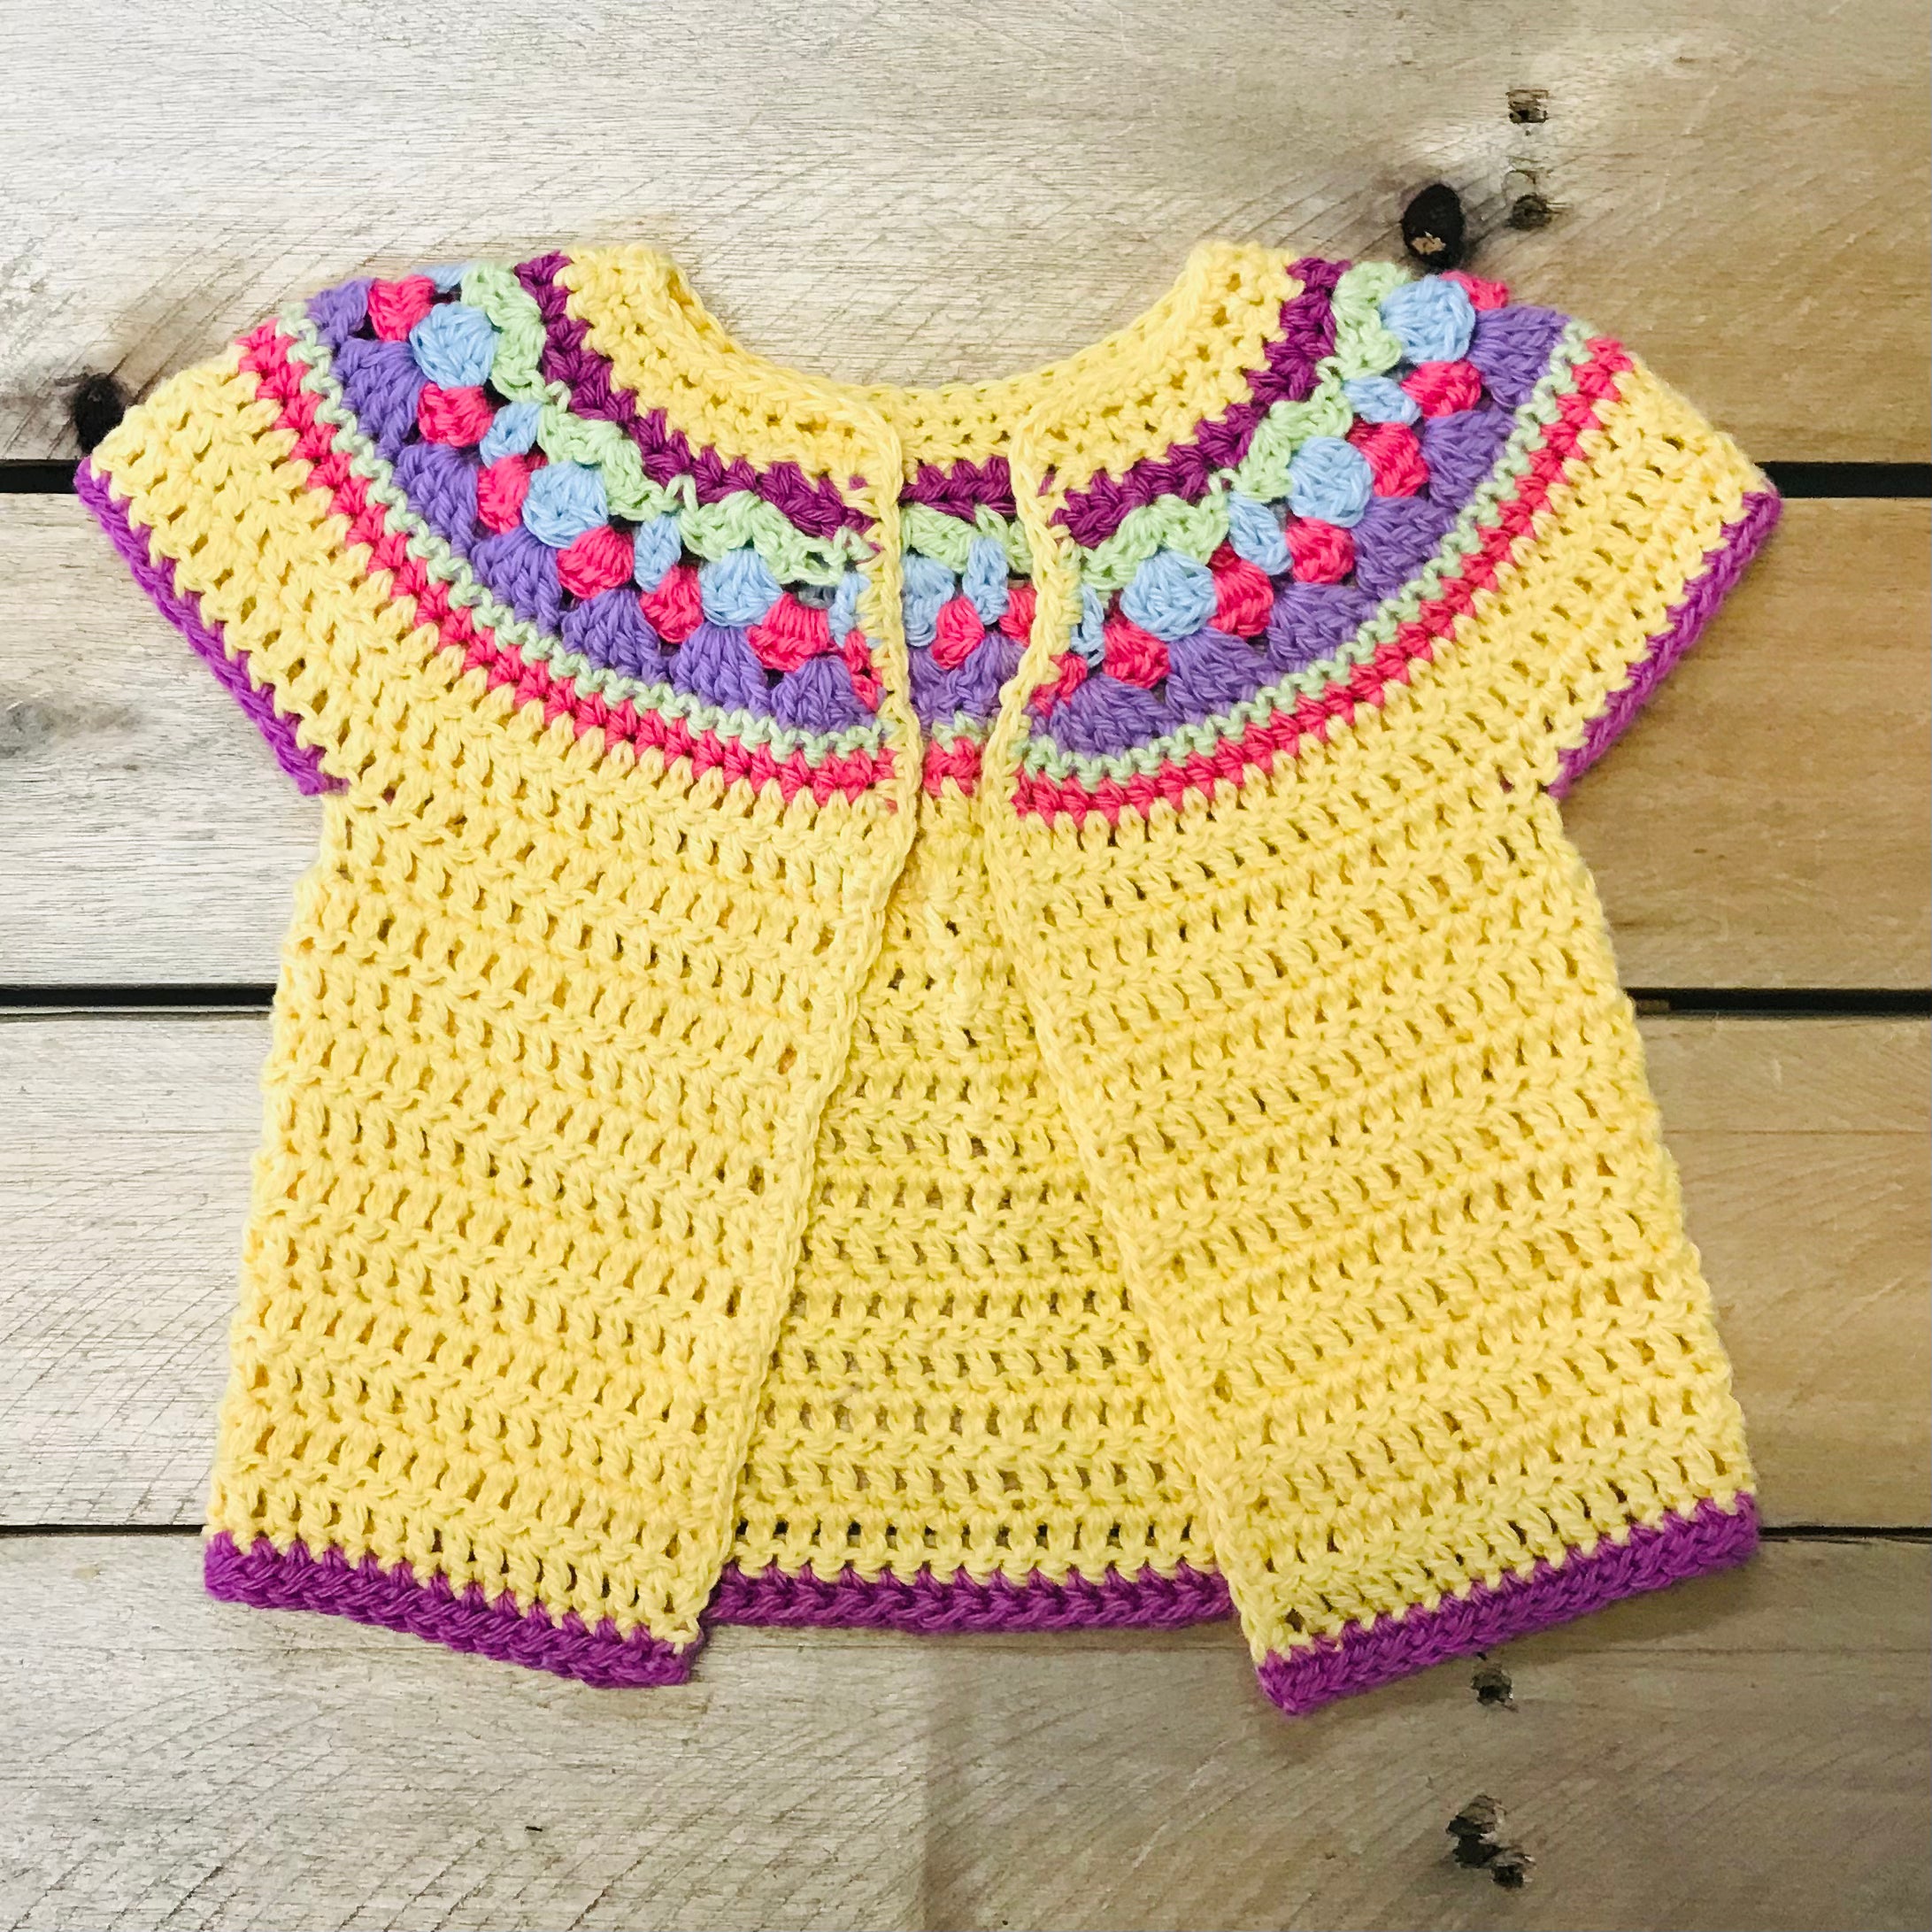 hand-knitted locally - Child Lemon Crochet Vest Cardigan